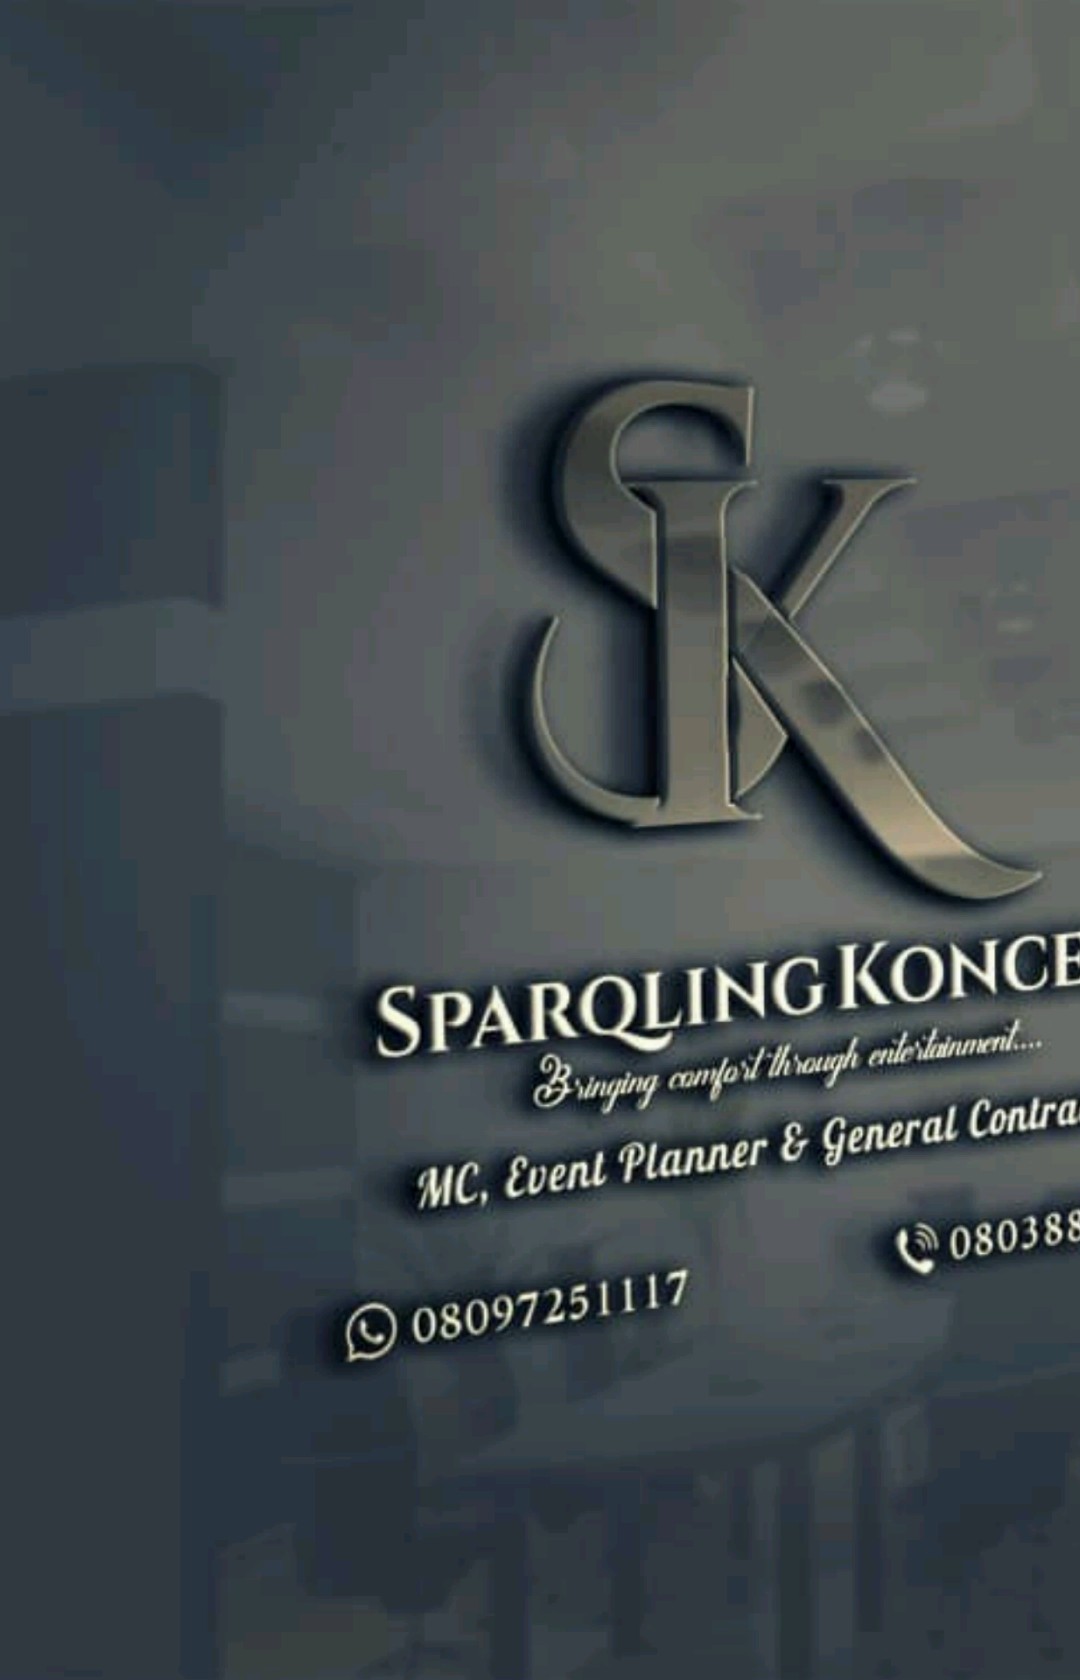 Sparqling koncept provider